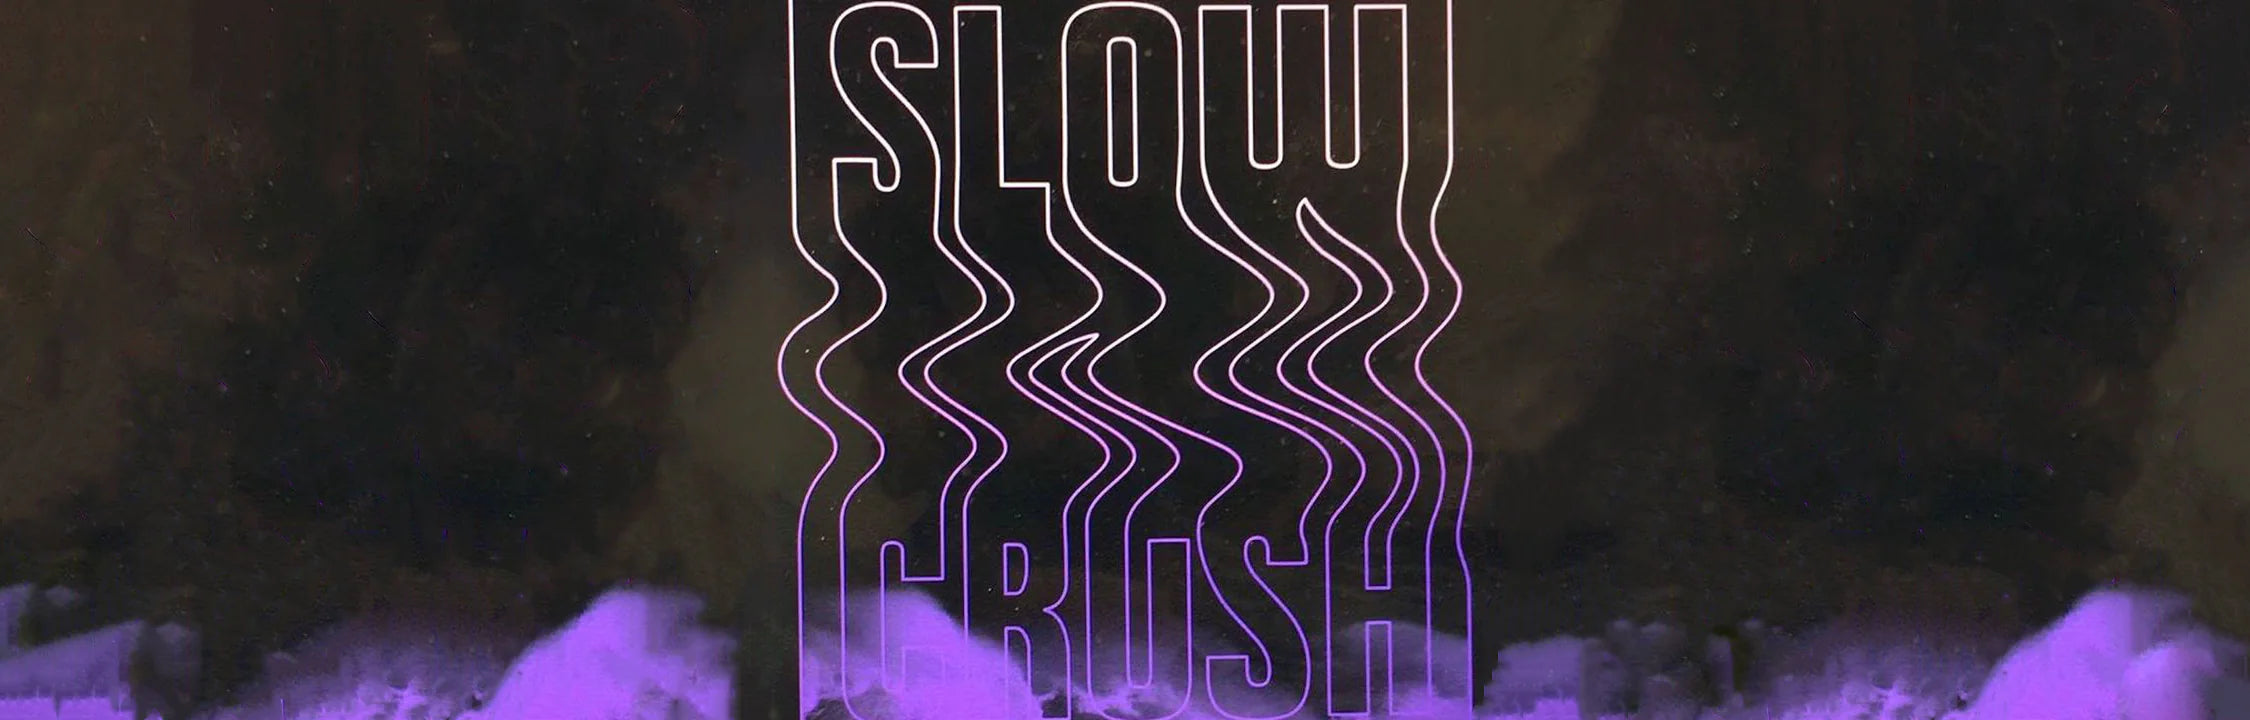 Slow Crush